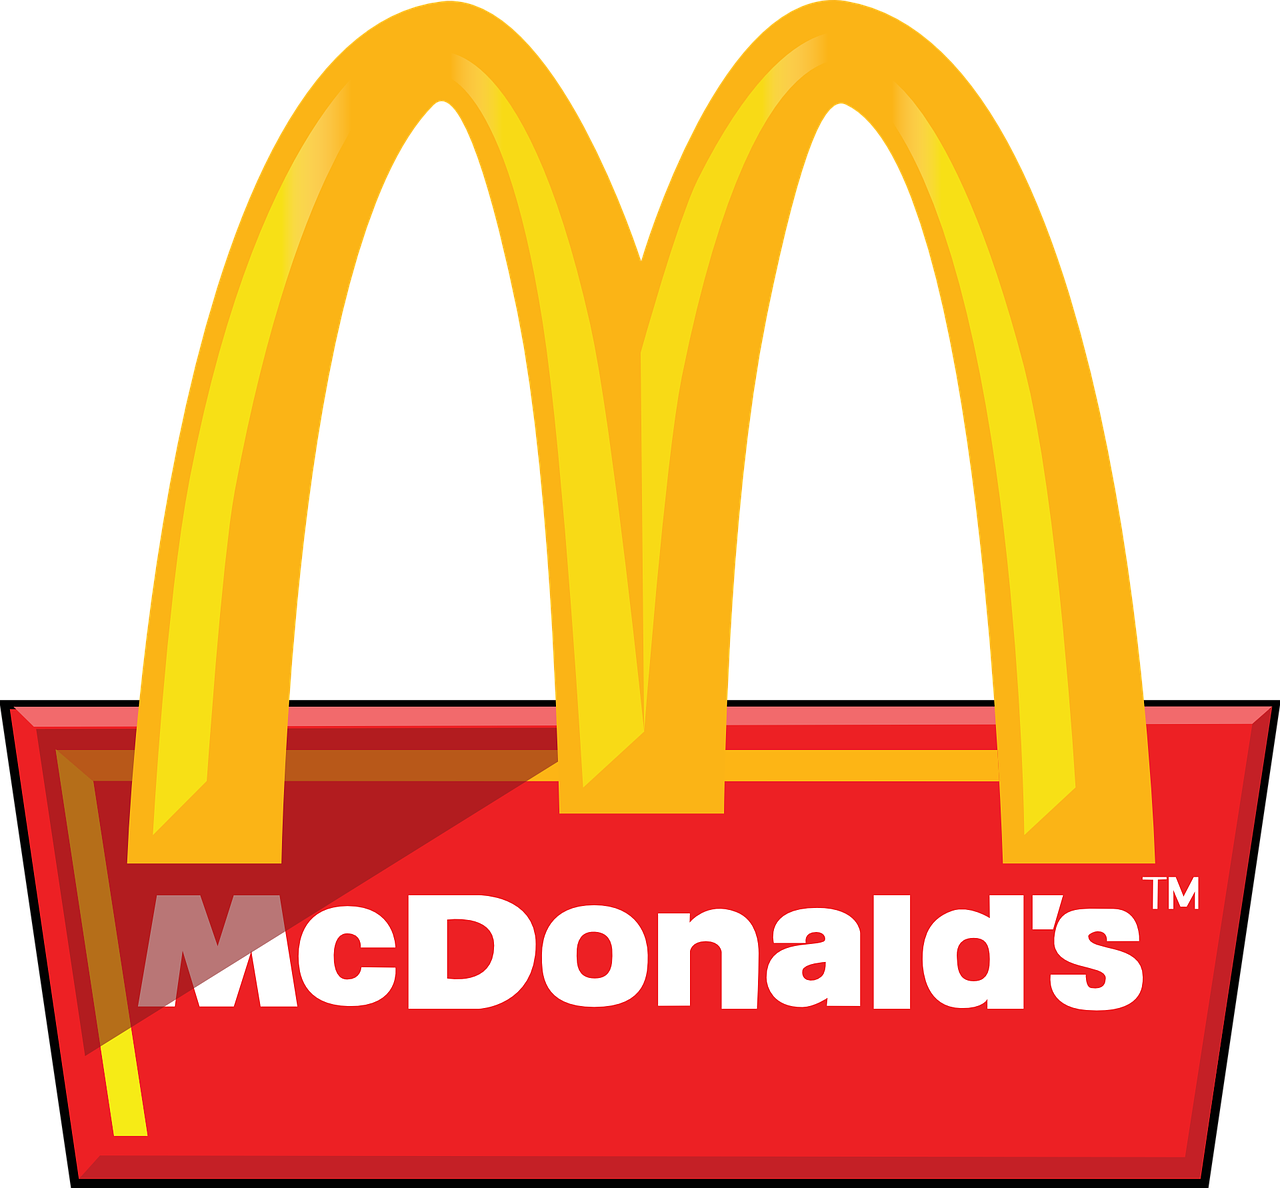 Mcdonalds clipart golden arches. Fast food giant mcdonald